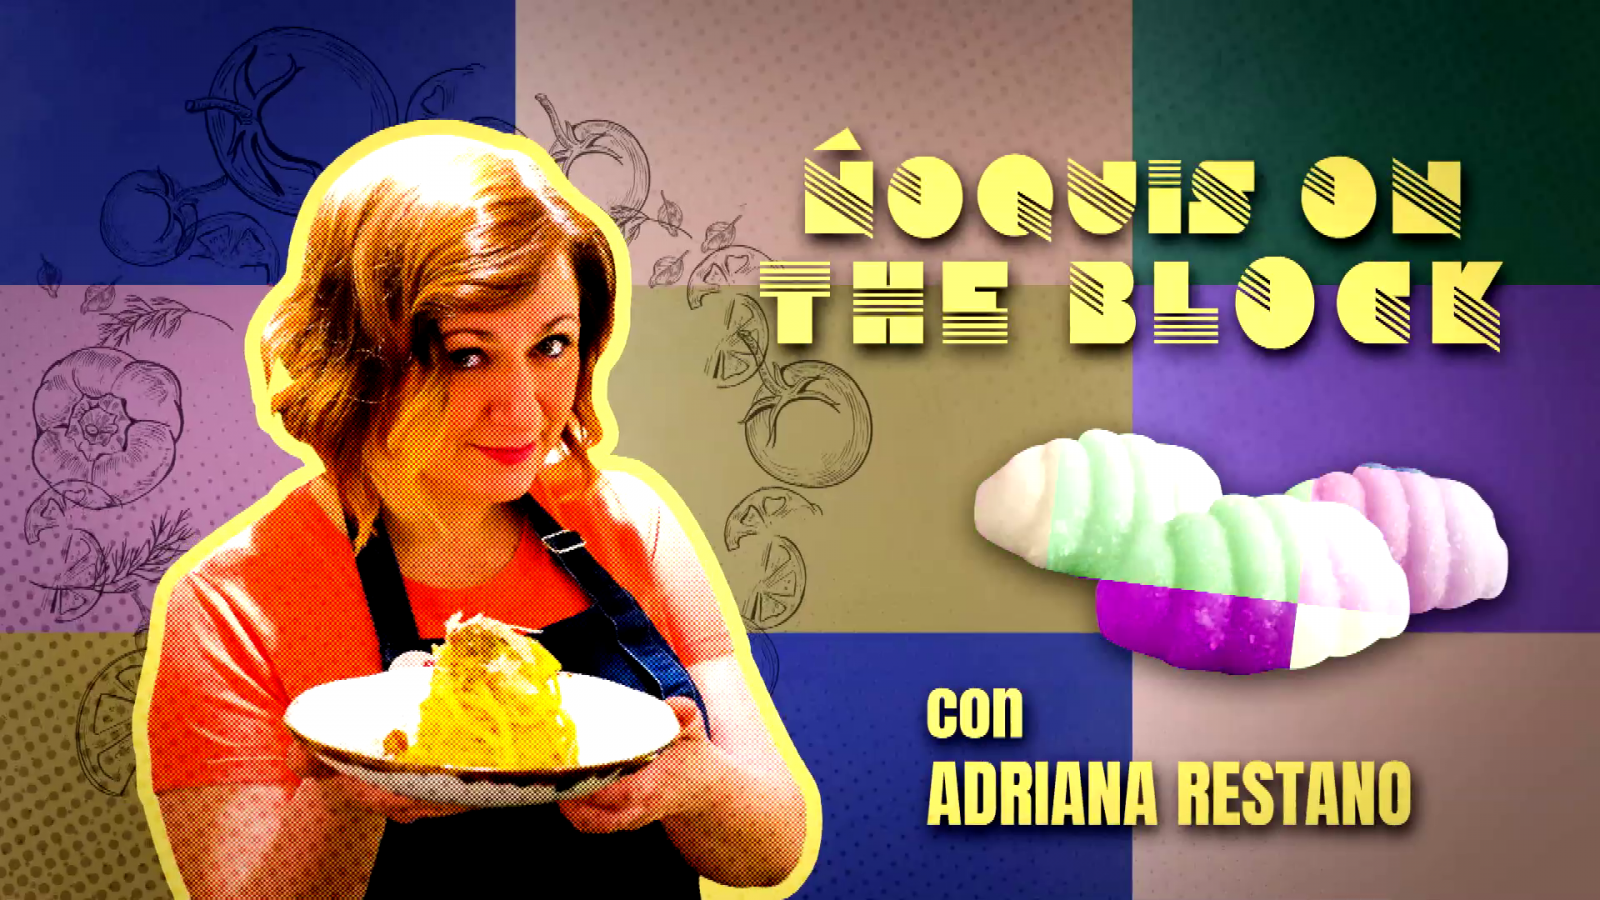 Banana Split - Adriana Restano y sus ñoquis on the block